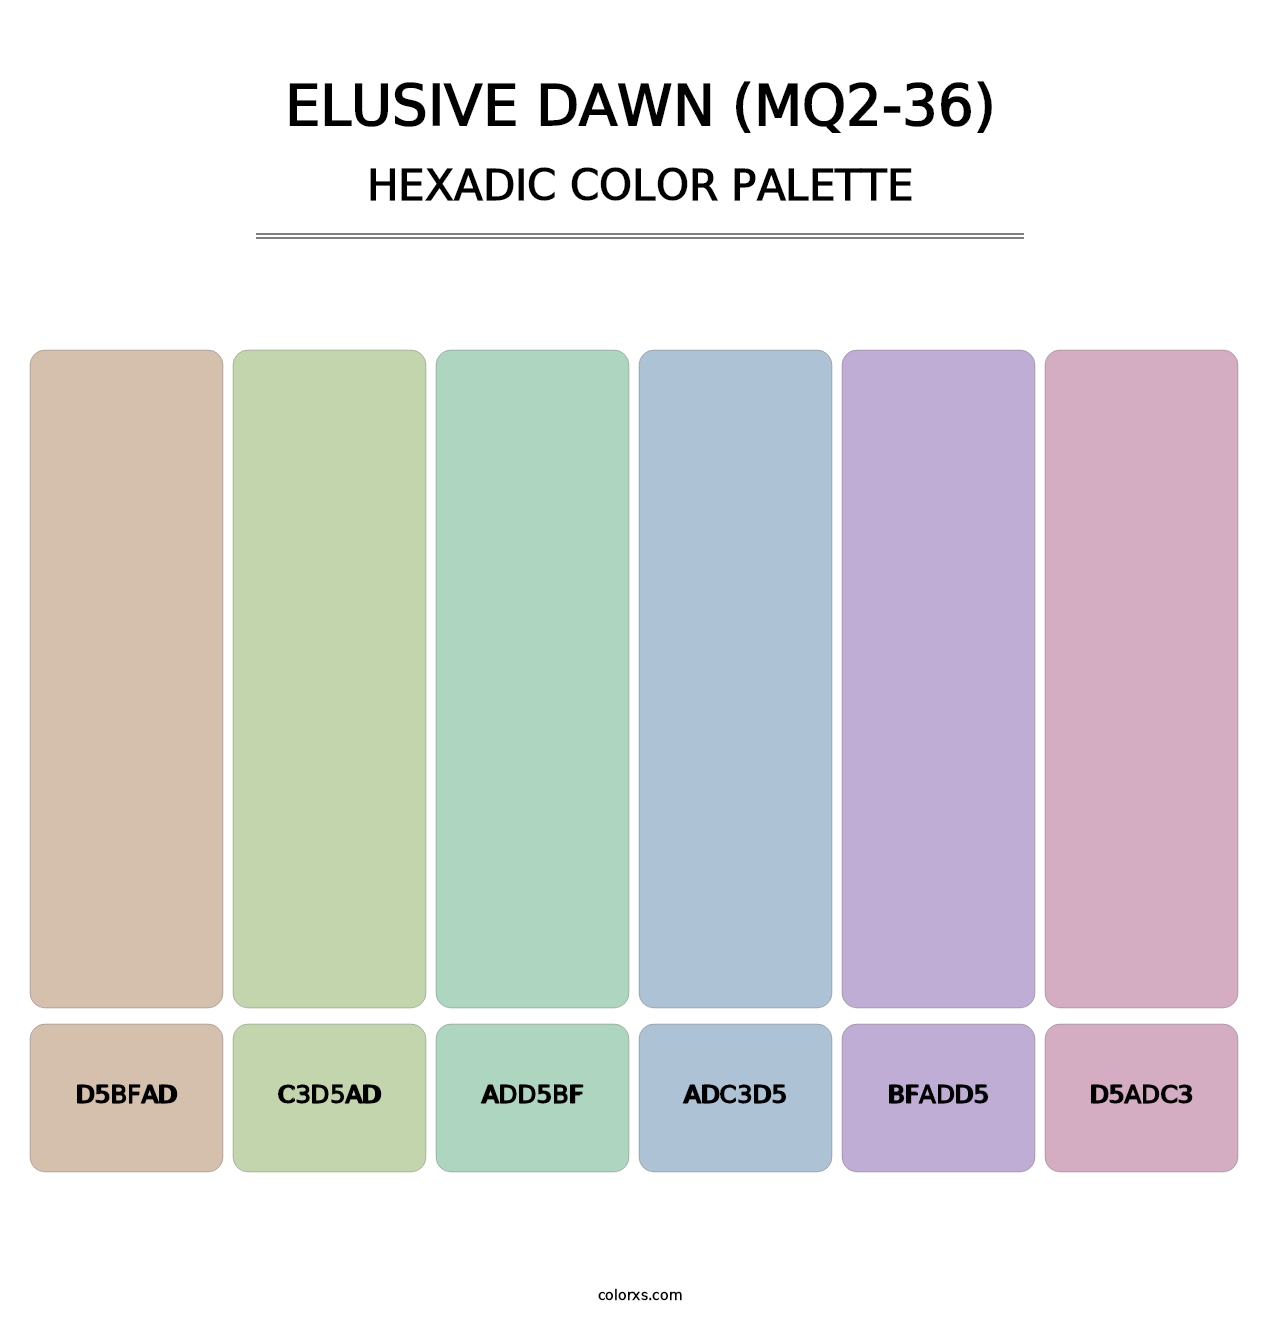 Elusive Dawn (MQ2-36) - Hexadic Color Palette